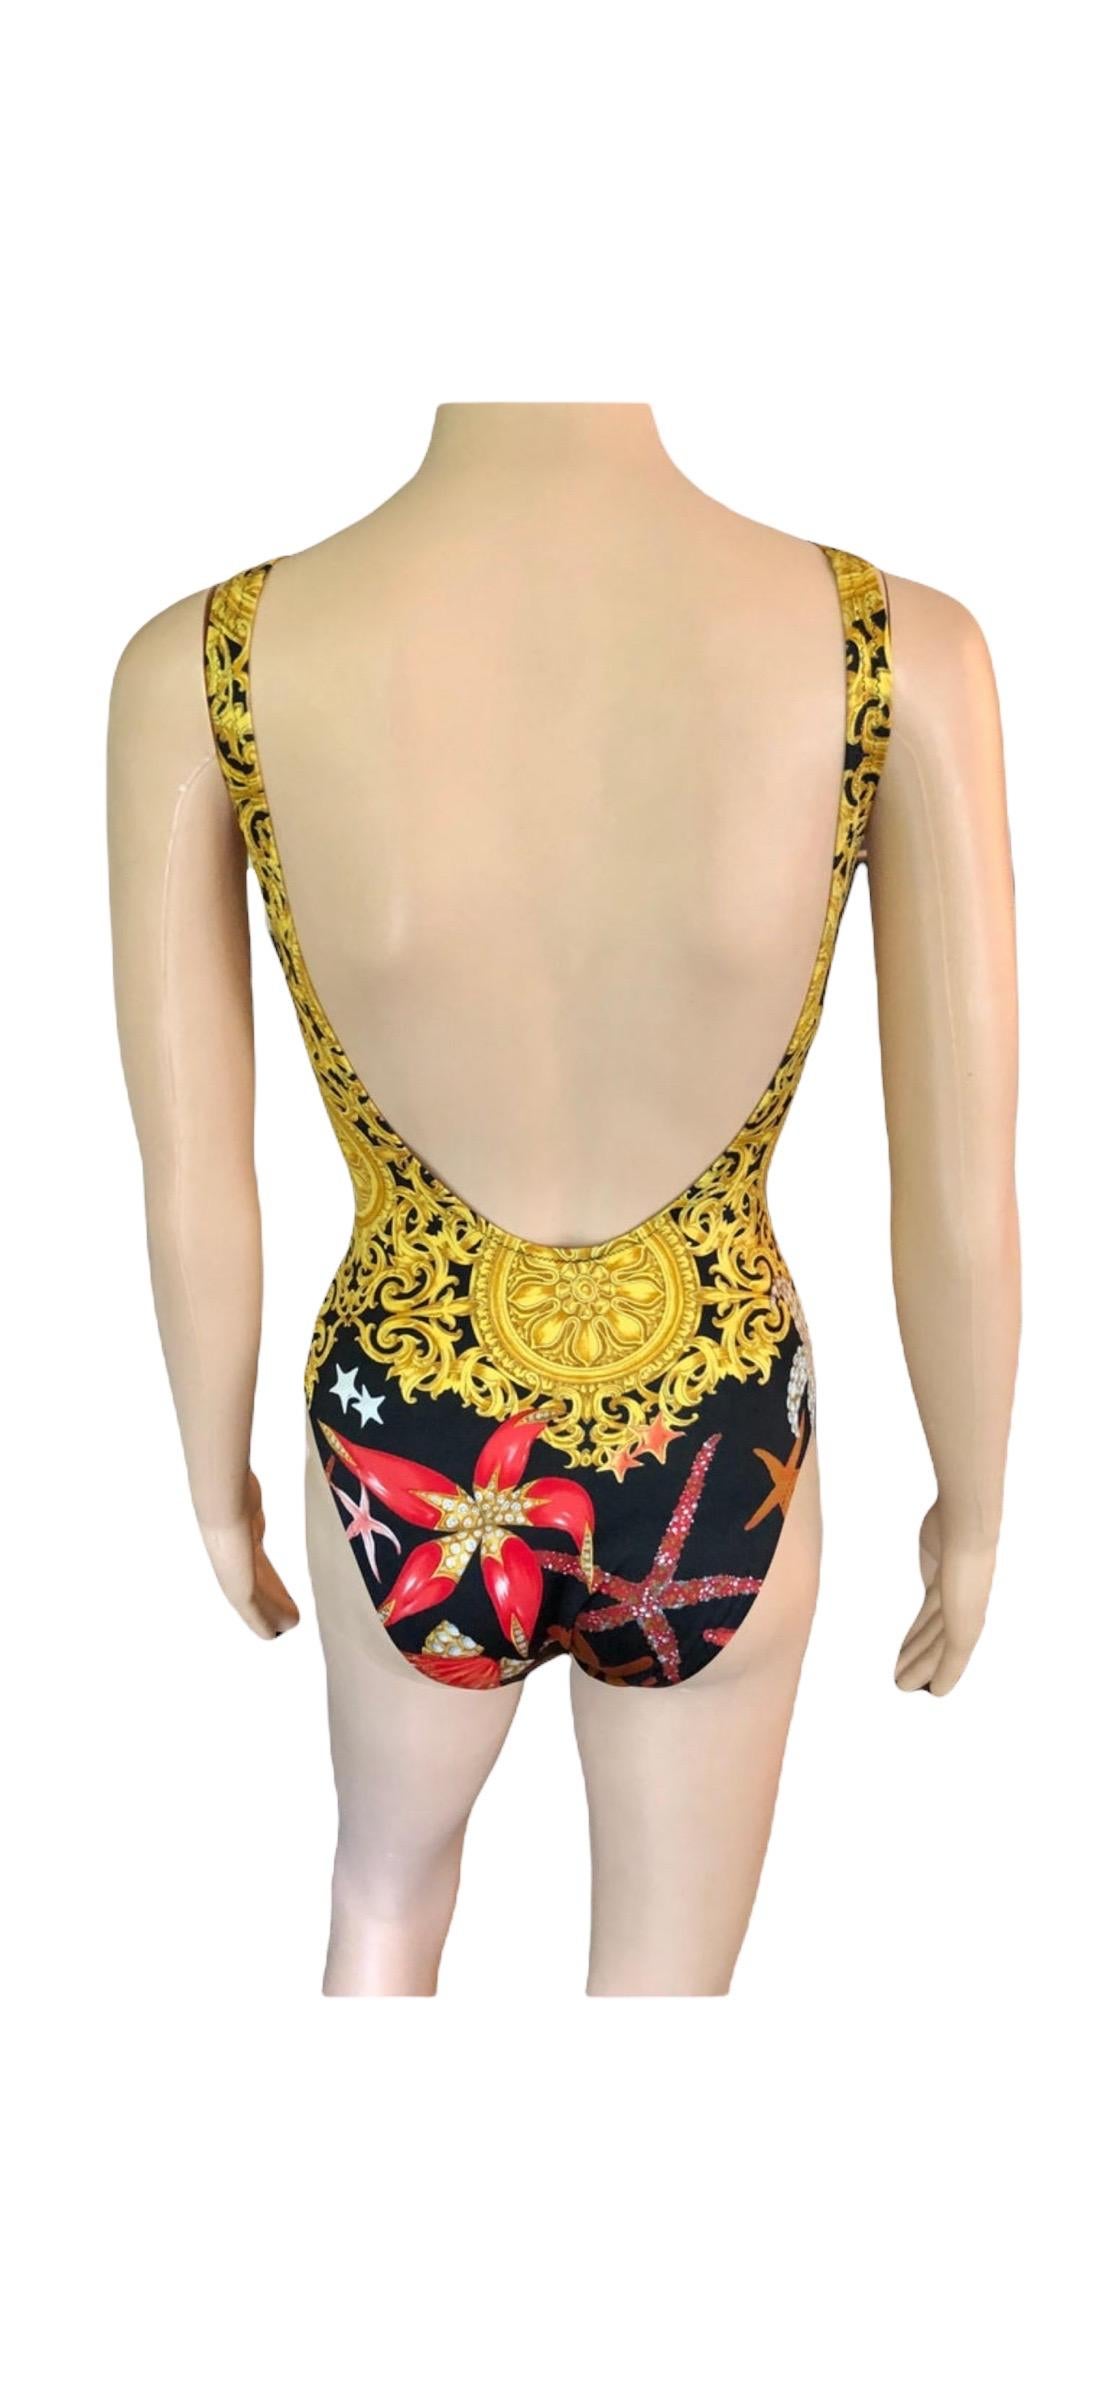 Gianni Versace S/S 1992 Baroque Seashell Backless Bodysuit Swimwear Swimsuit For Sale 9